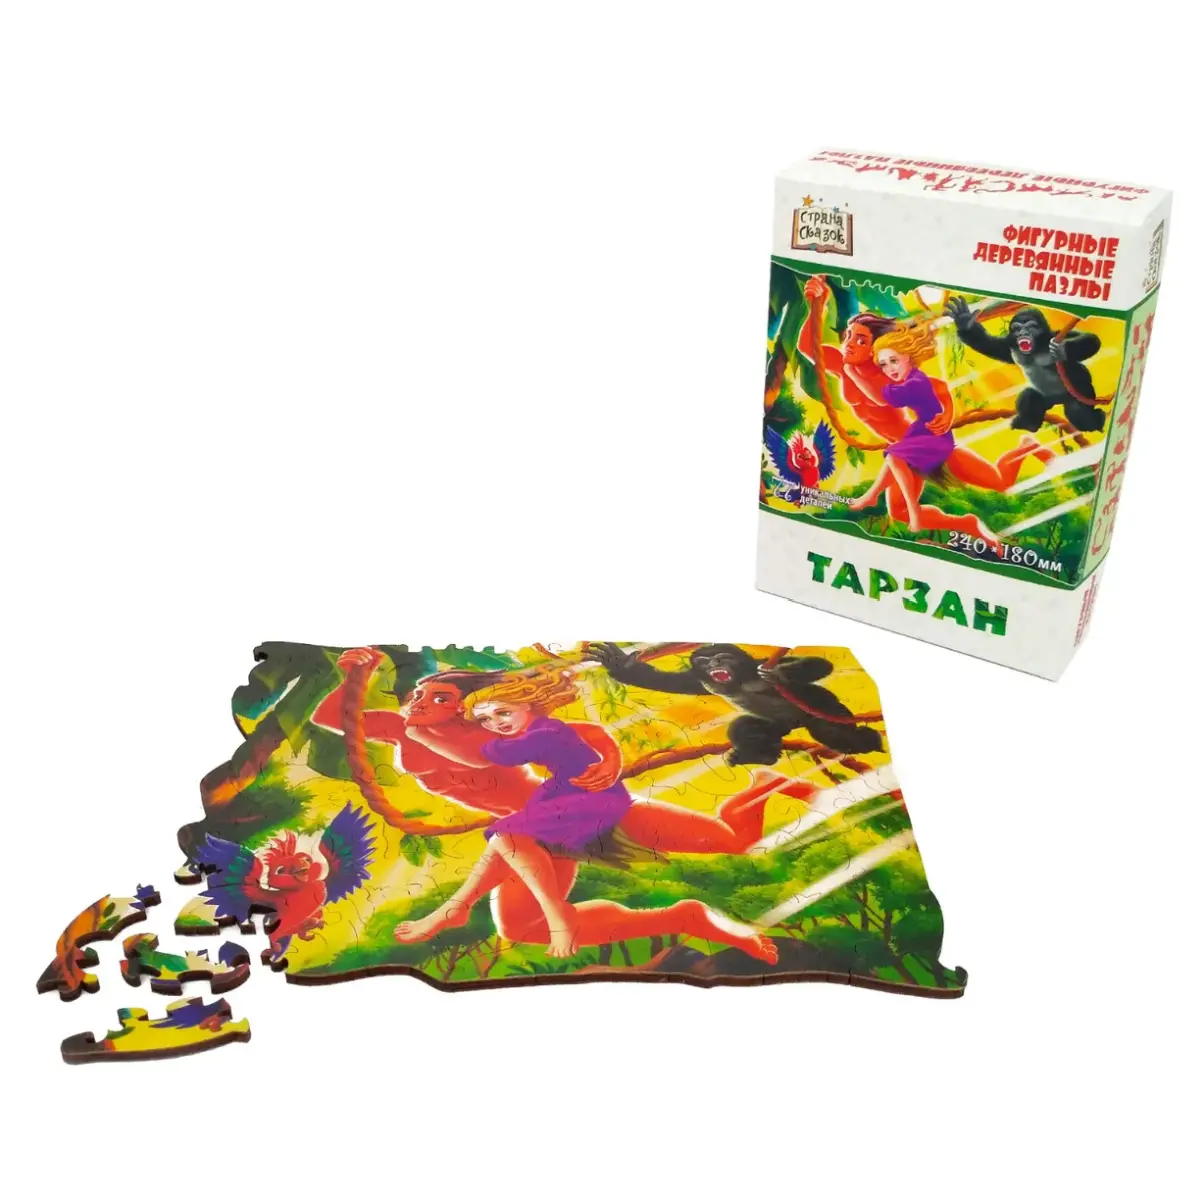 Фигурный пазл "Тарзан" - фото